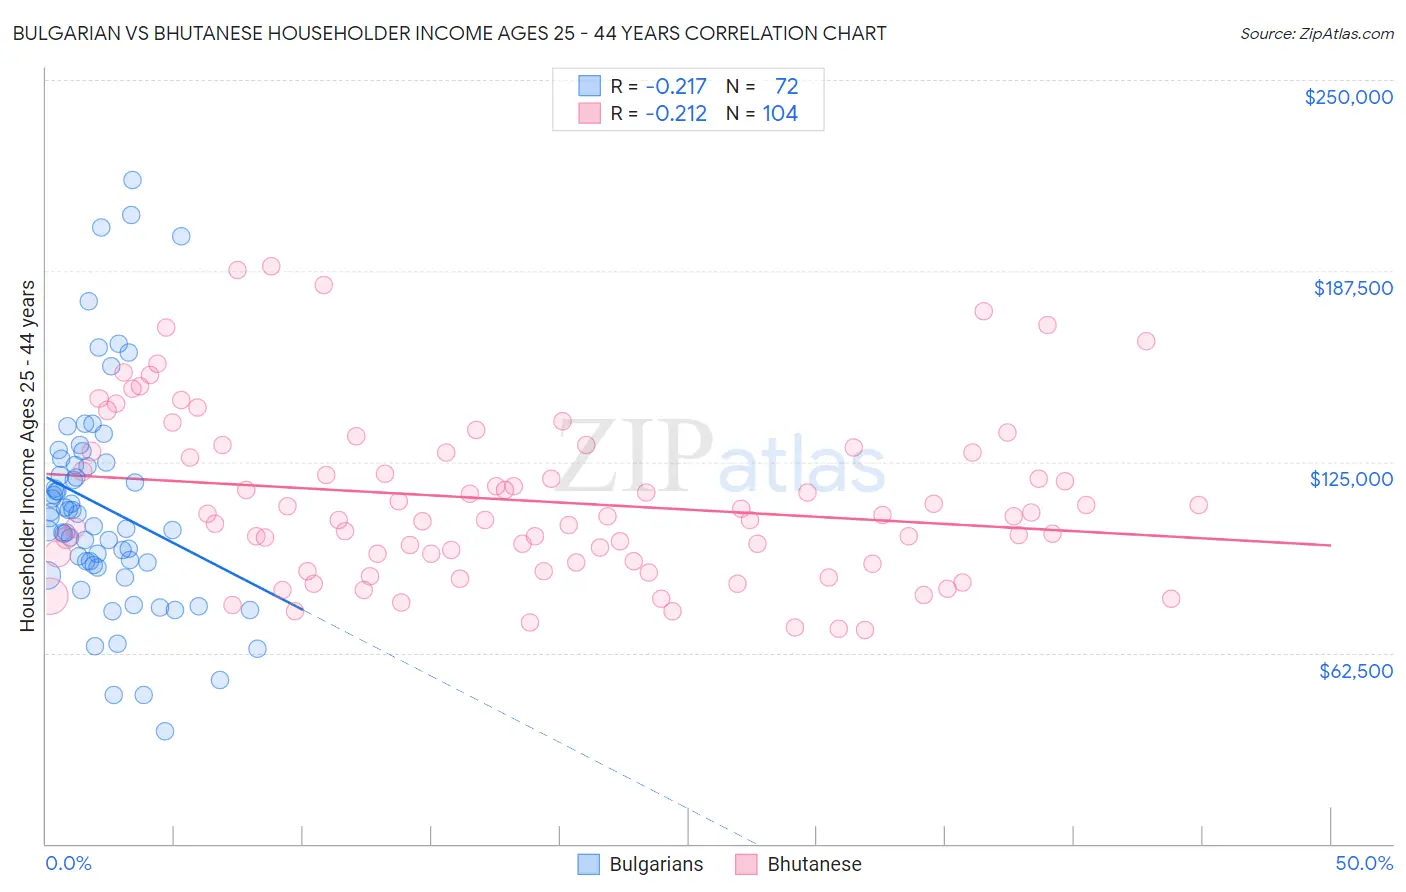 Bulgarian vs Bhutanese Householder Income Ages 25 - 44 years